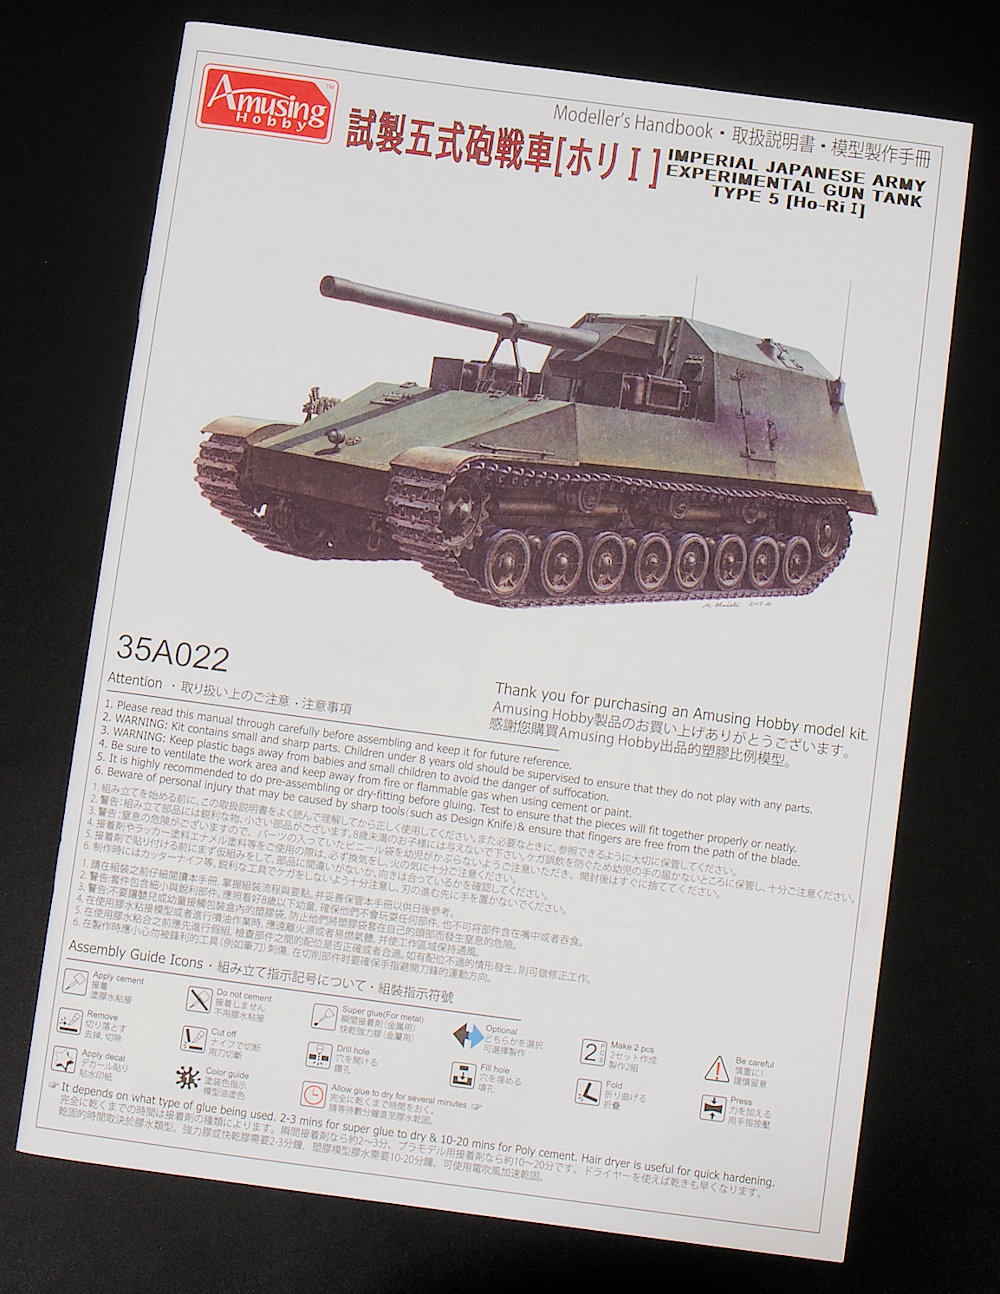 Amusing Hobby 1/35 35A022 Imperial Japanese Army Experimental Gun Tank 